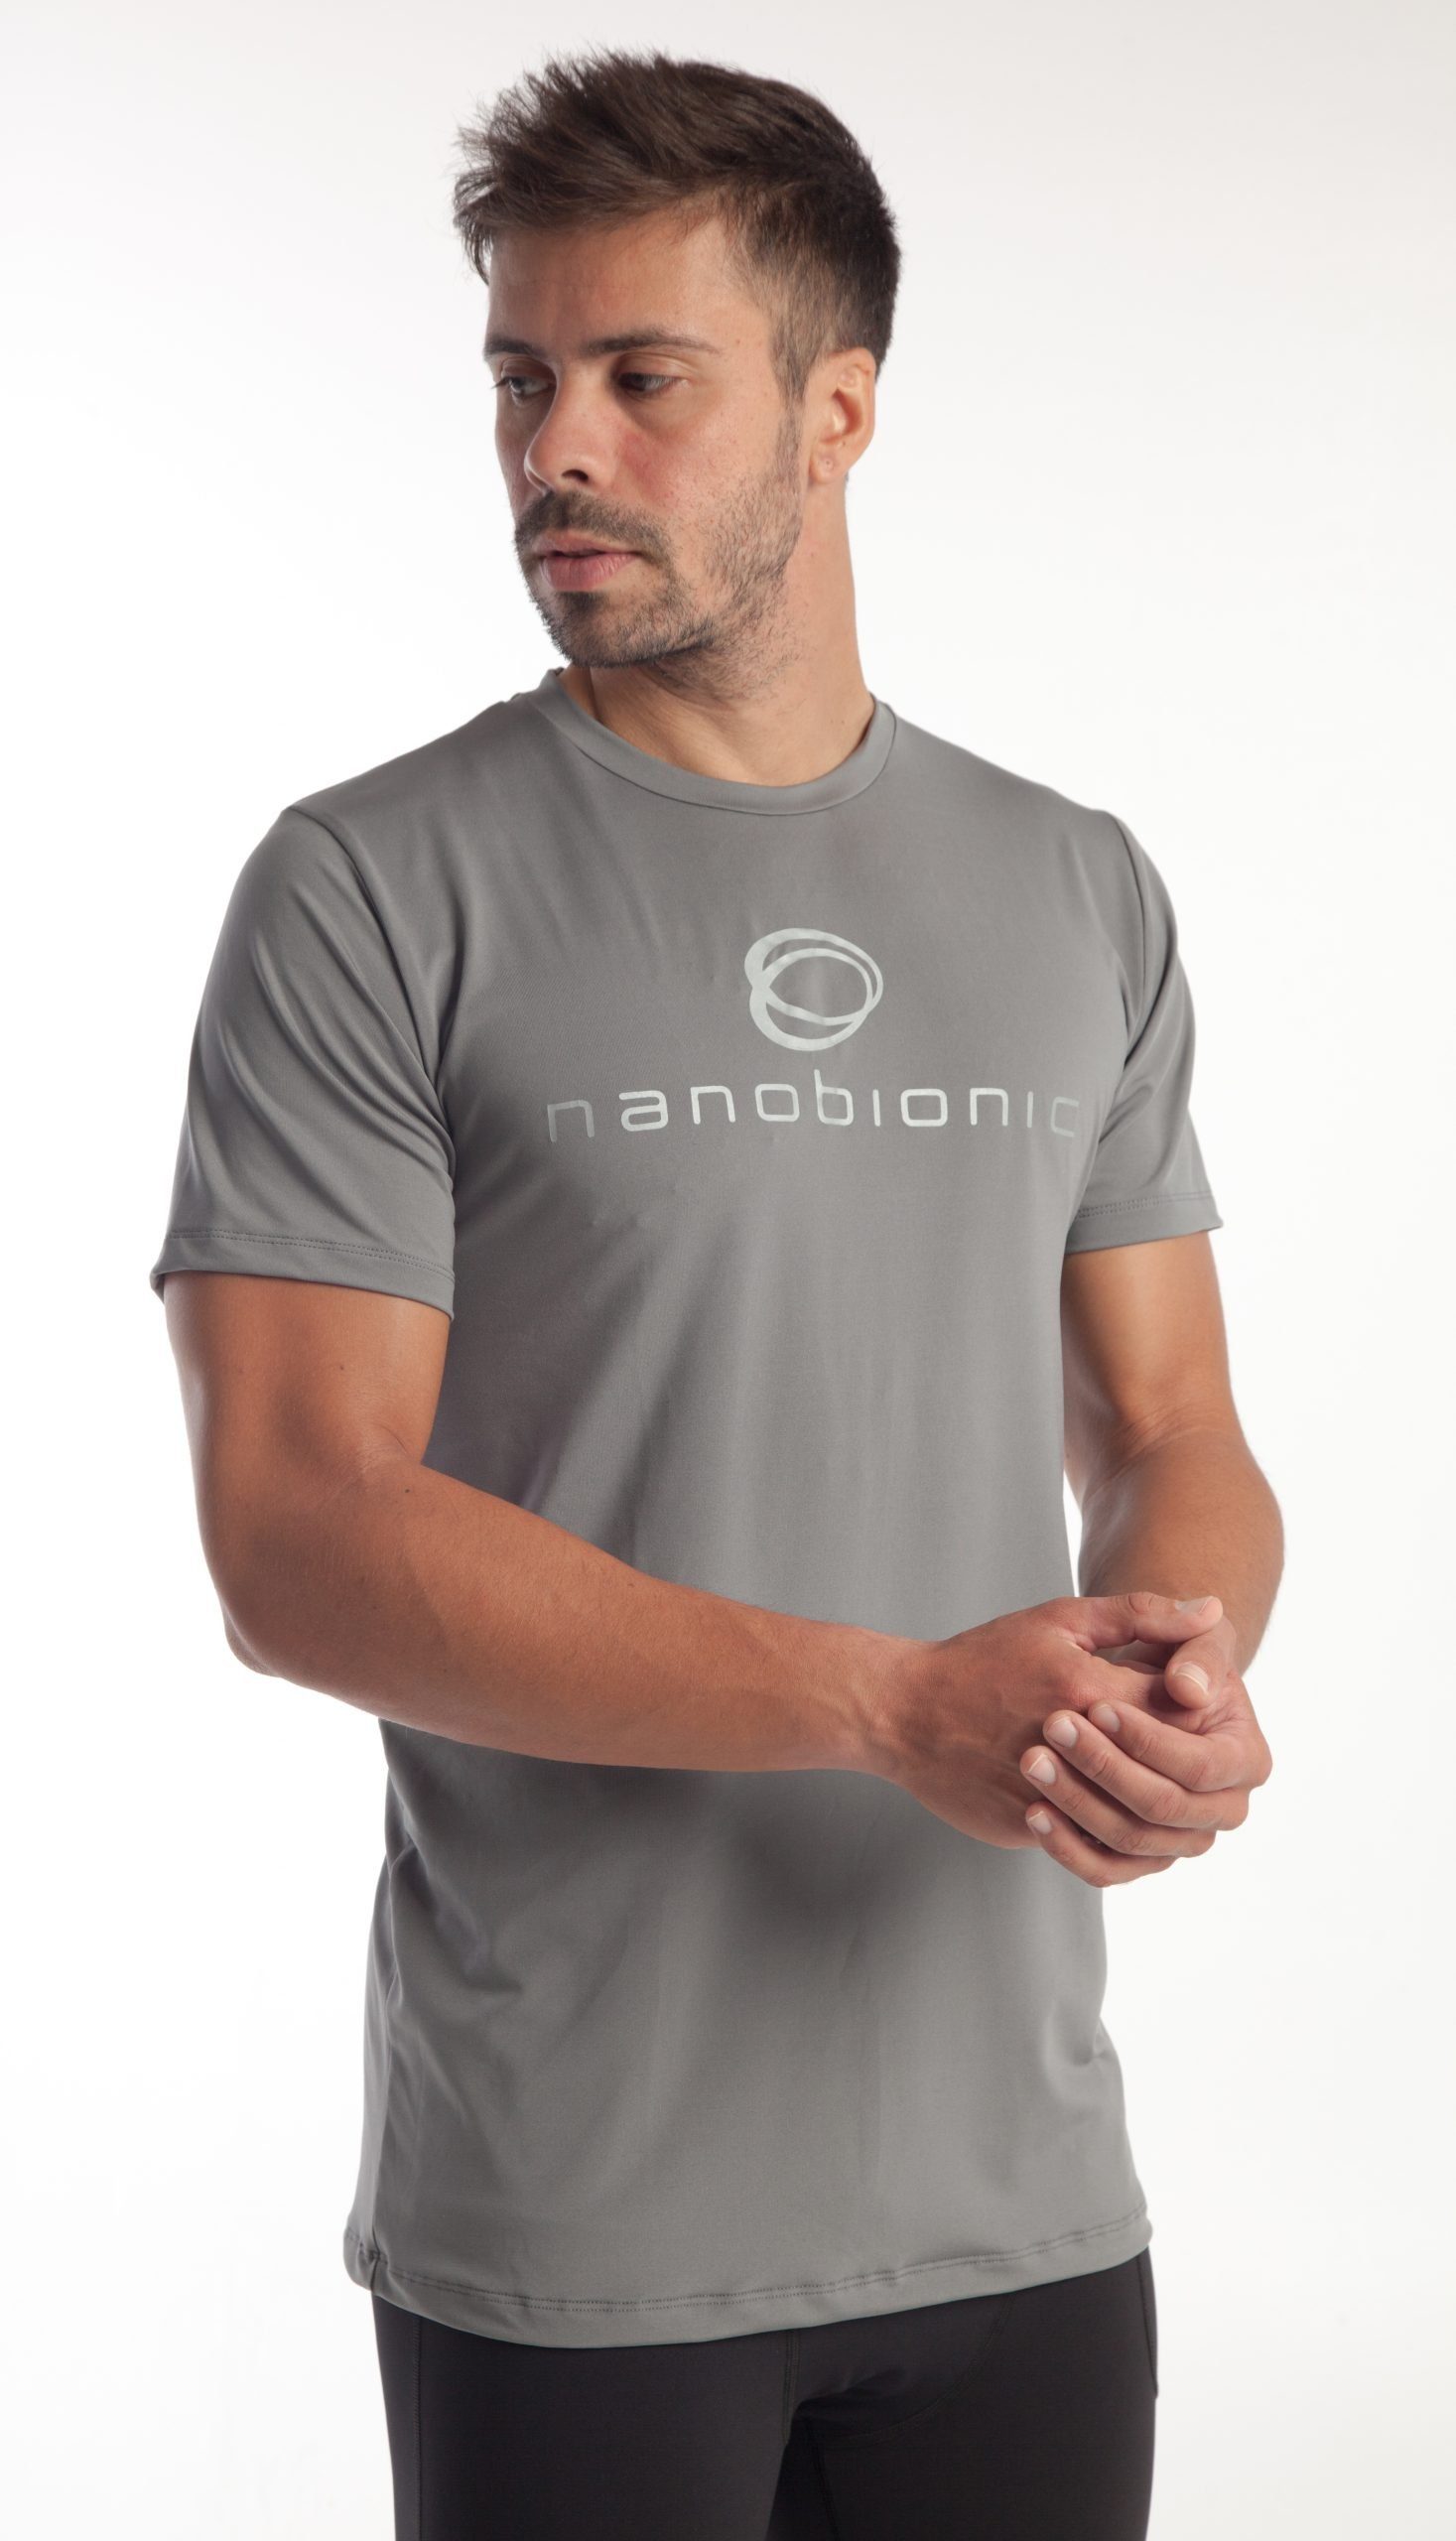 www.nanobionic.de NANOBIONIC® und I-Tech (Innovative Energiequelle!!, T-shirt (grau/silber) Funktionsshirt exklusive NANOBIONIC® Award) NANOBIONIC®-Technologie, eine Iconic - nahezu NASA endlose Nanobionic®